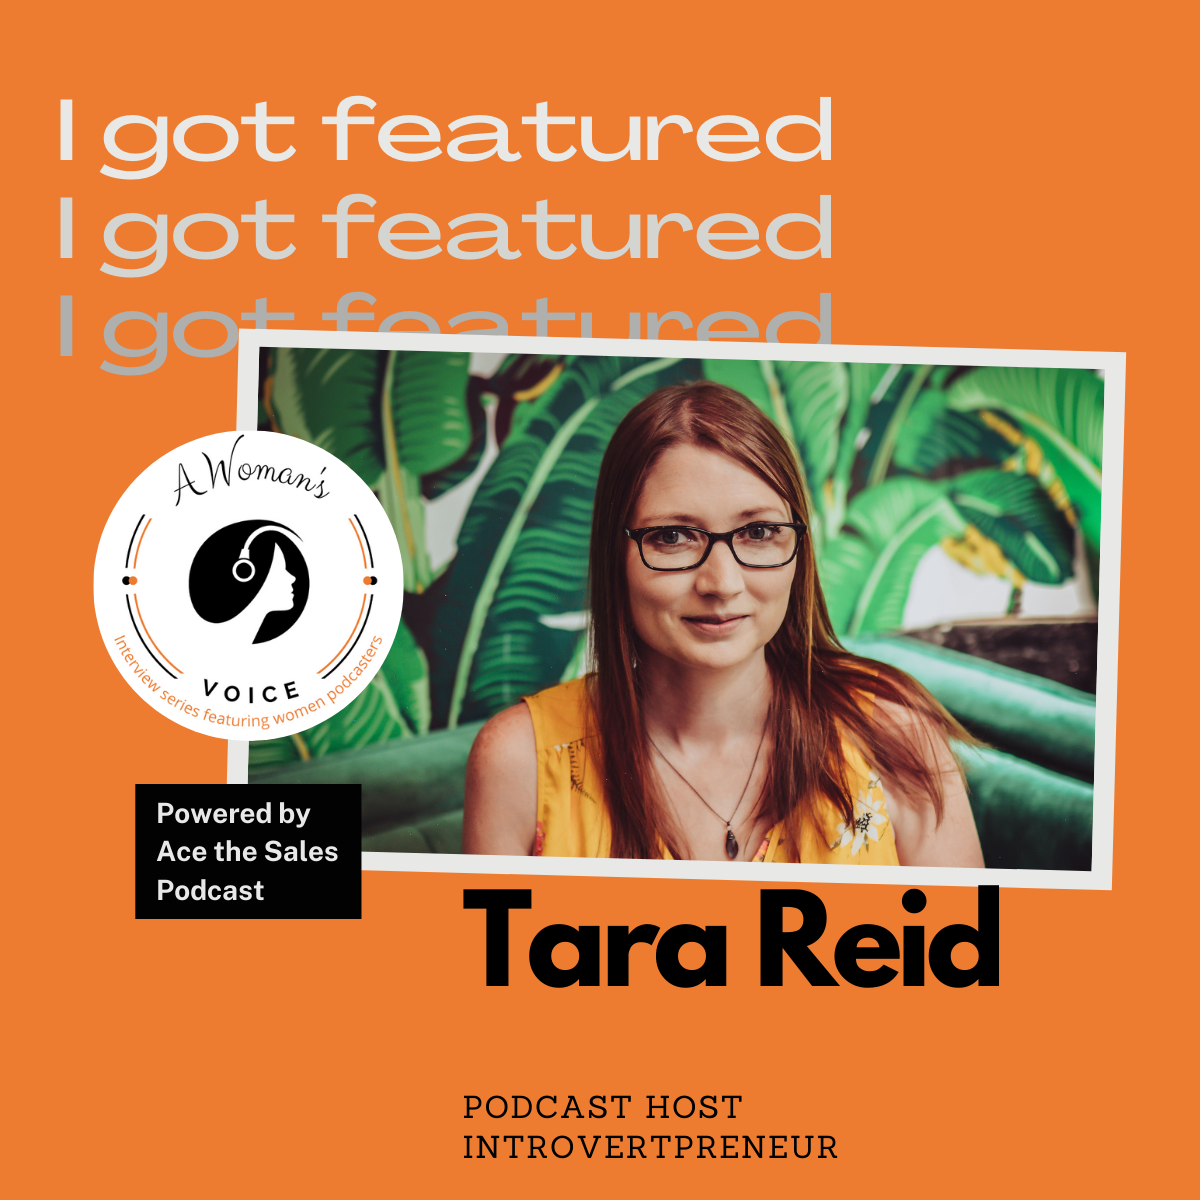 Featured: Tara Reid - Podcast Host - Introvertpreneur